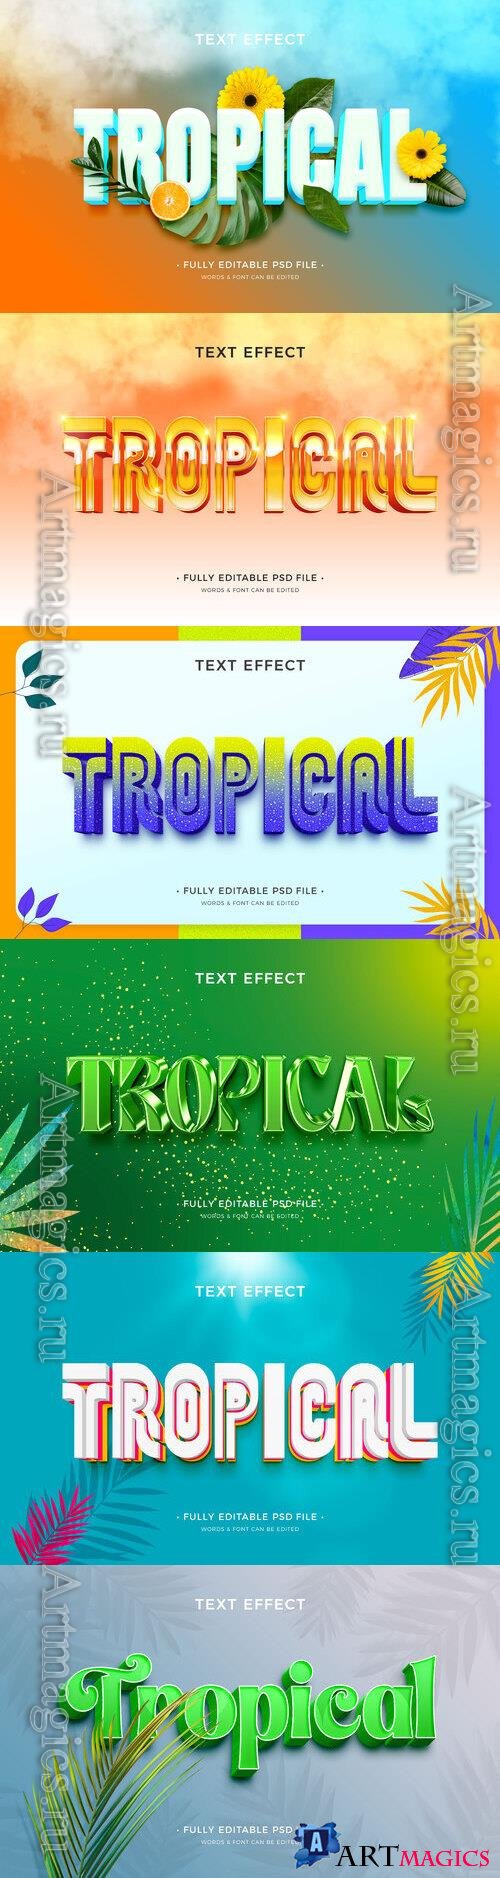 PSD tropical text effect vol 2